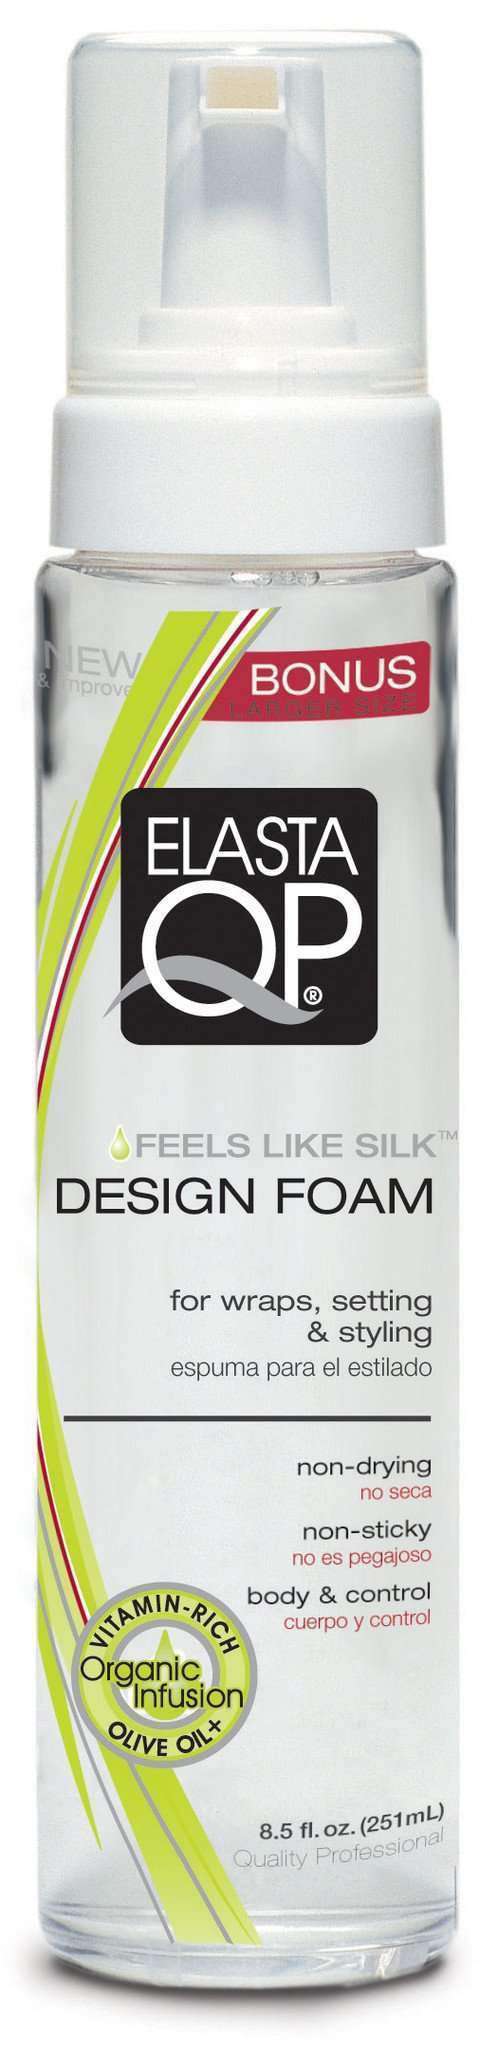 Elasta QP Design Foam - Deluxe Beauty Supply